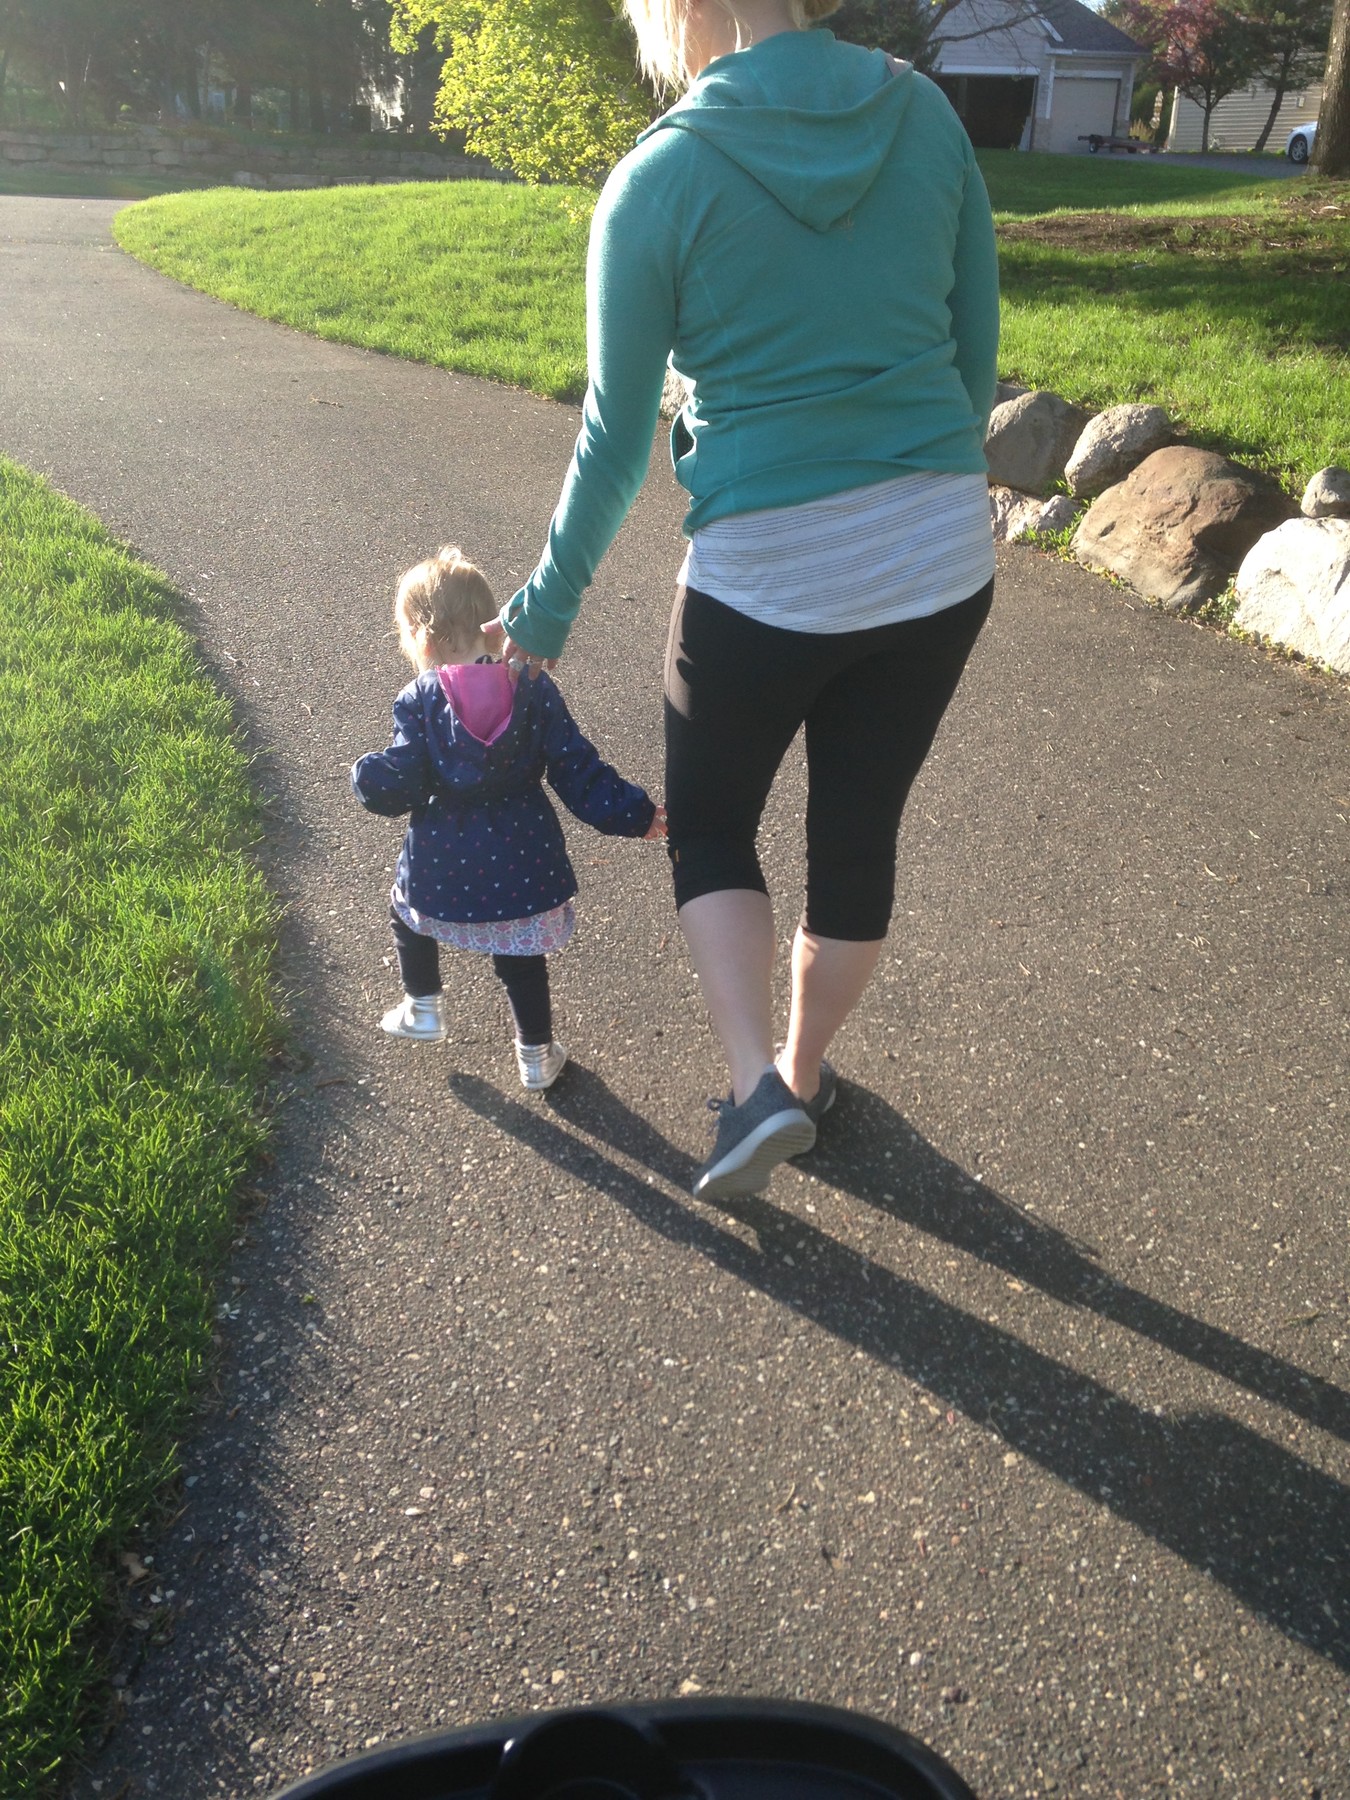 Walking with Mama